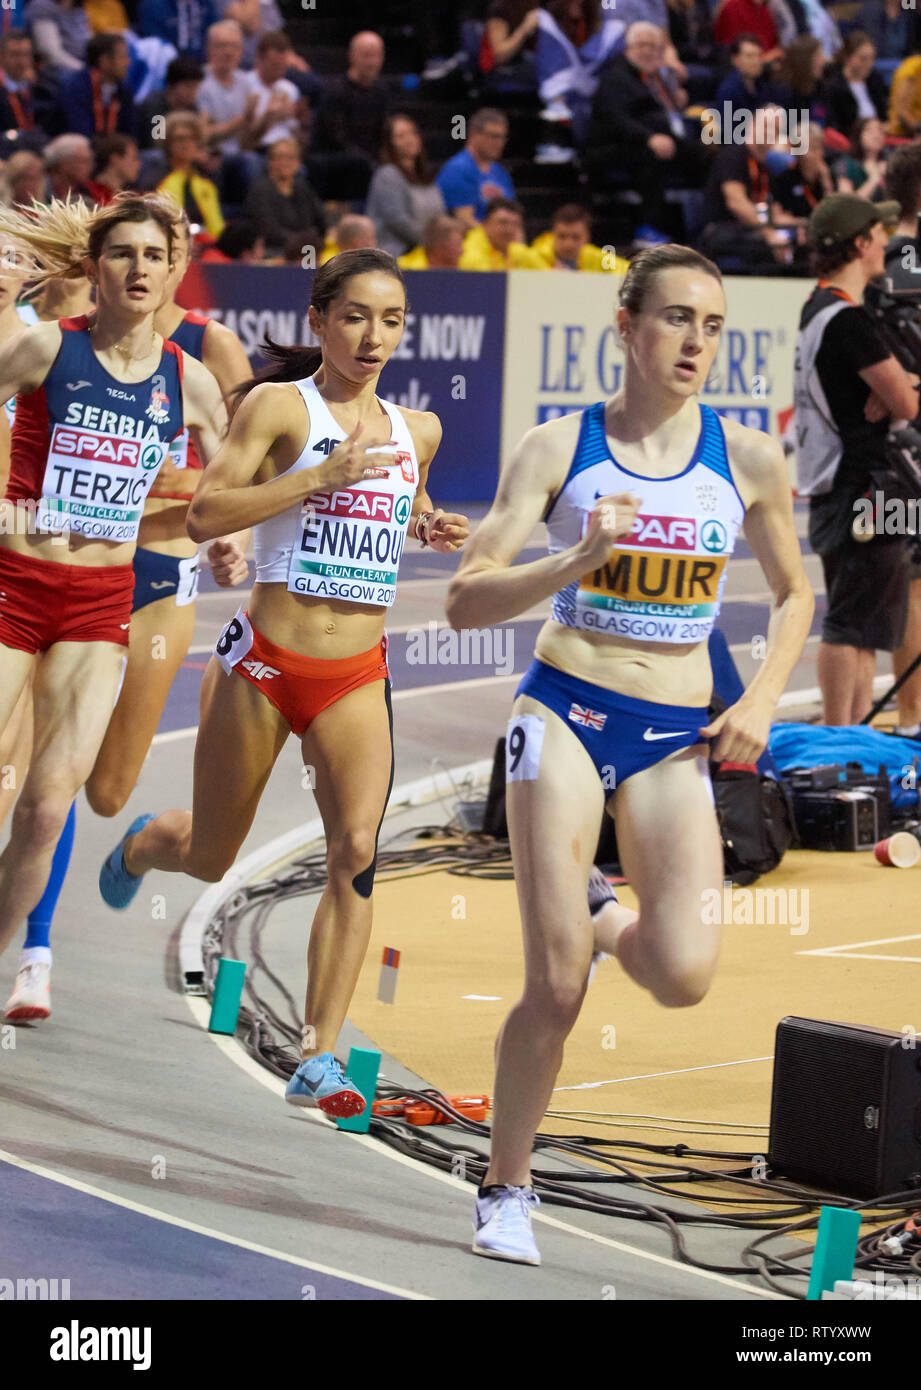 Glasgow, UK: 3rd March 2019: Sofia Ennaoui wins silver in 1500m race on European Athletics Indoor Championships 2019.Credit: Pawel Pietraszewski/ Alamy News Stock Photo